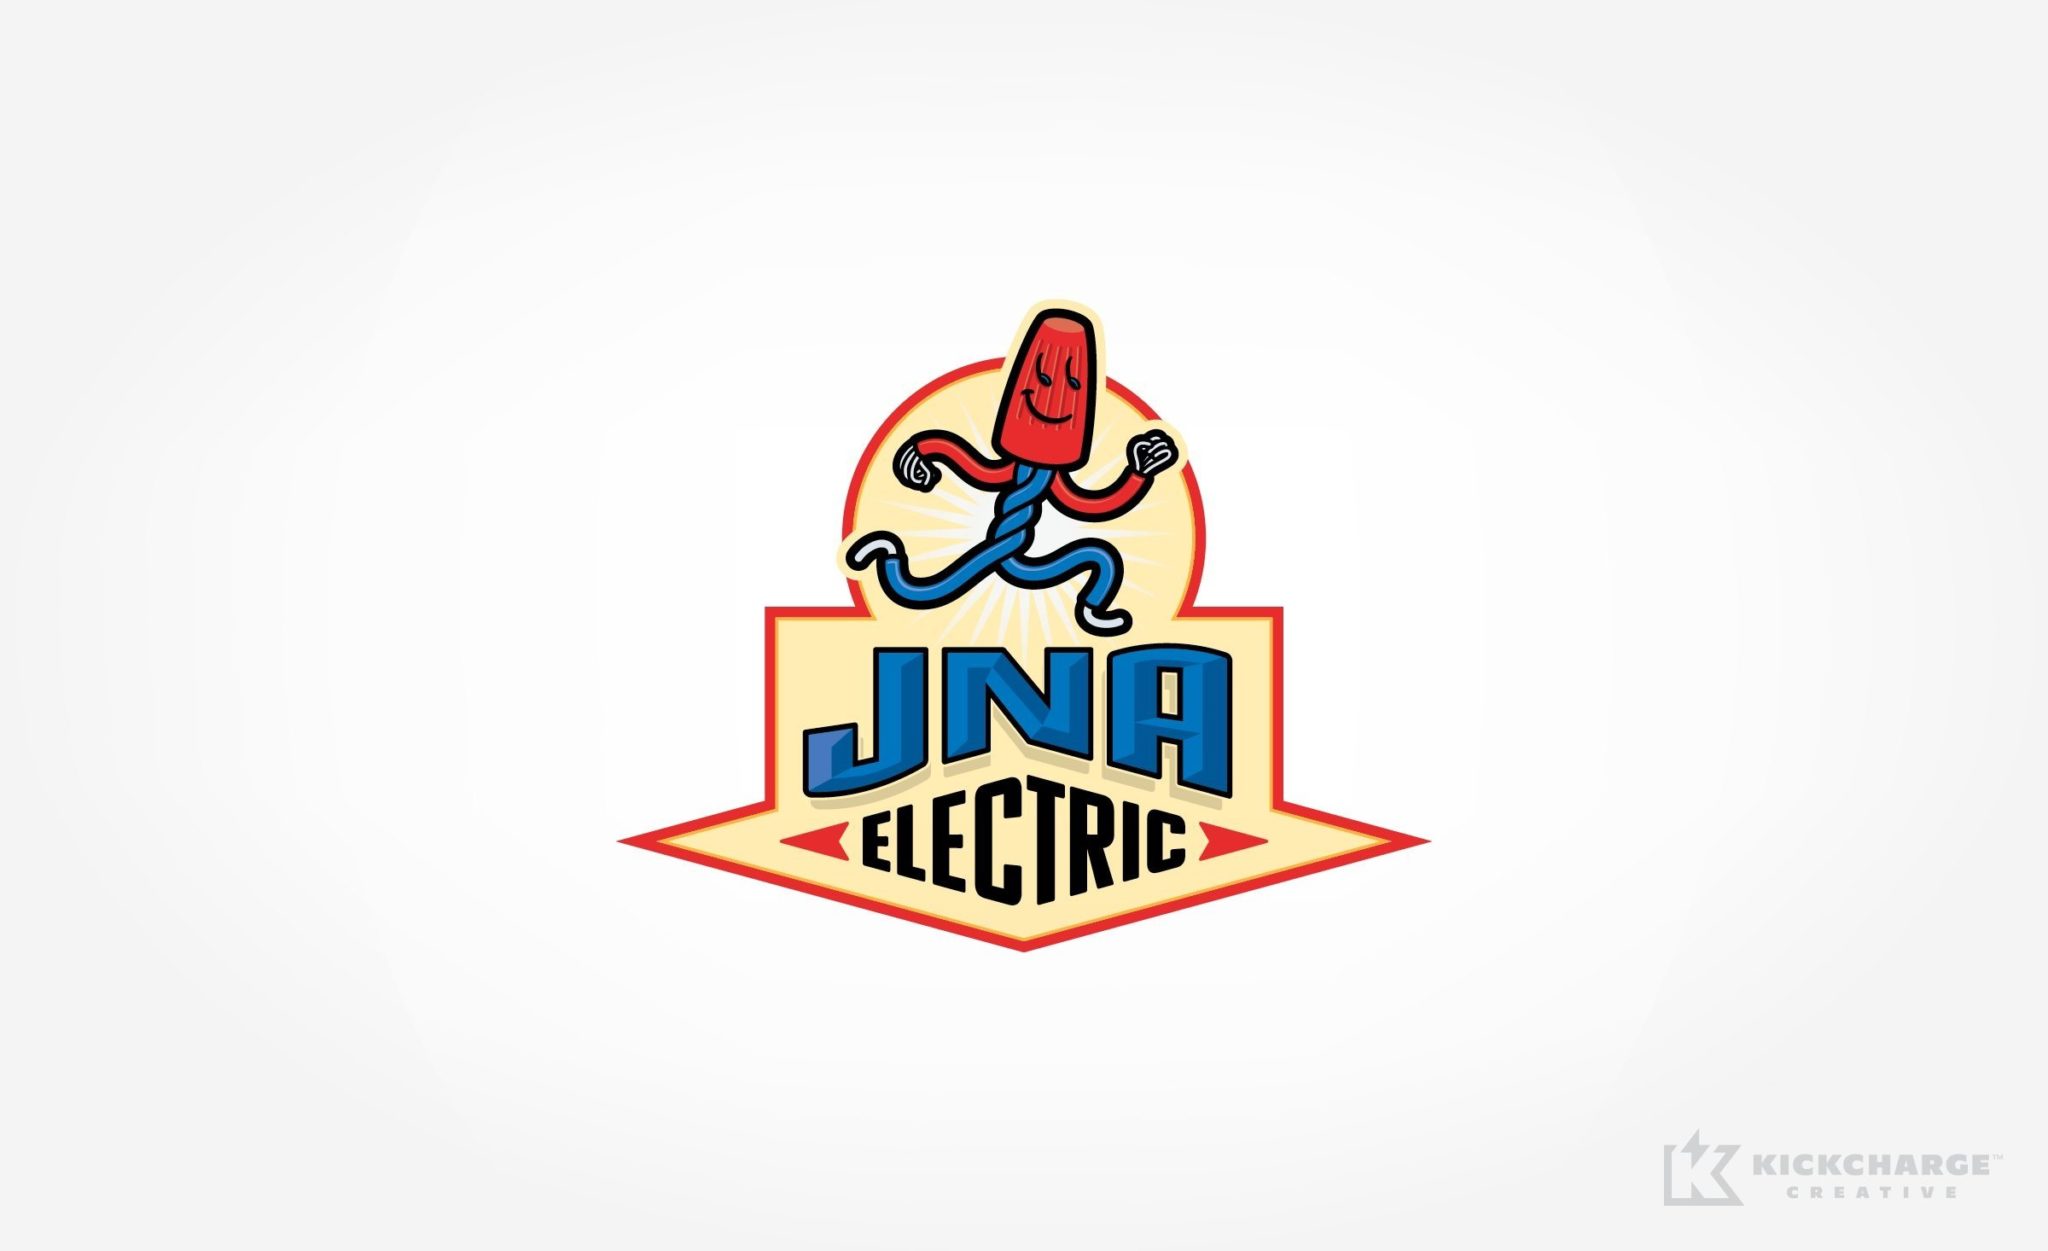 JNA Electric